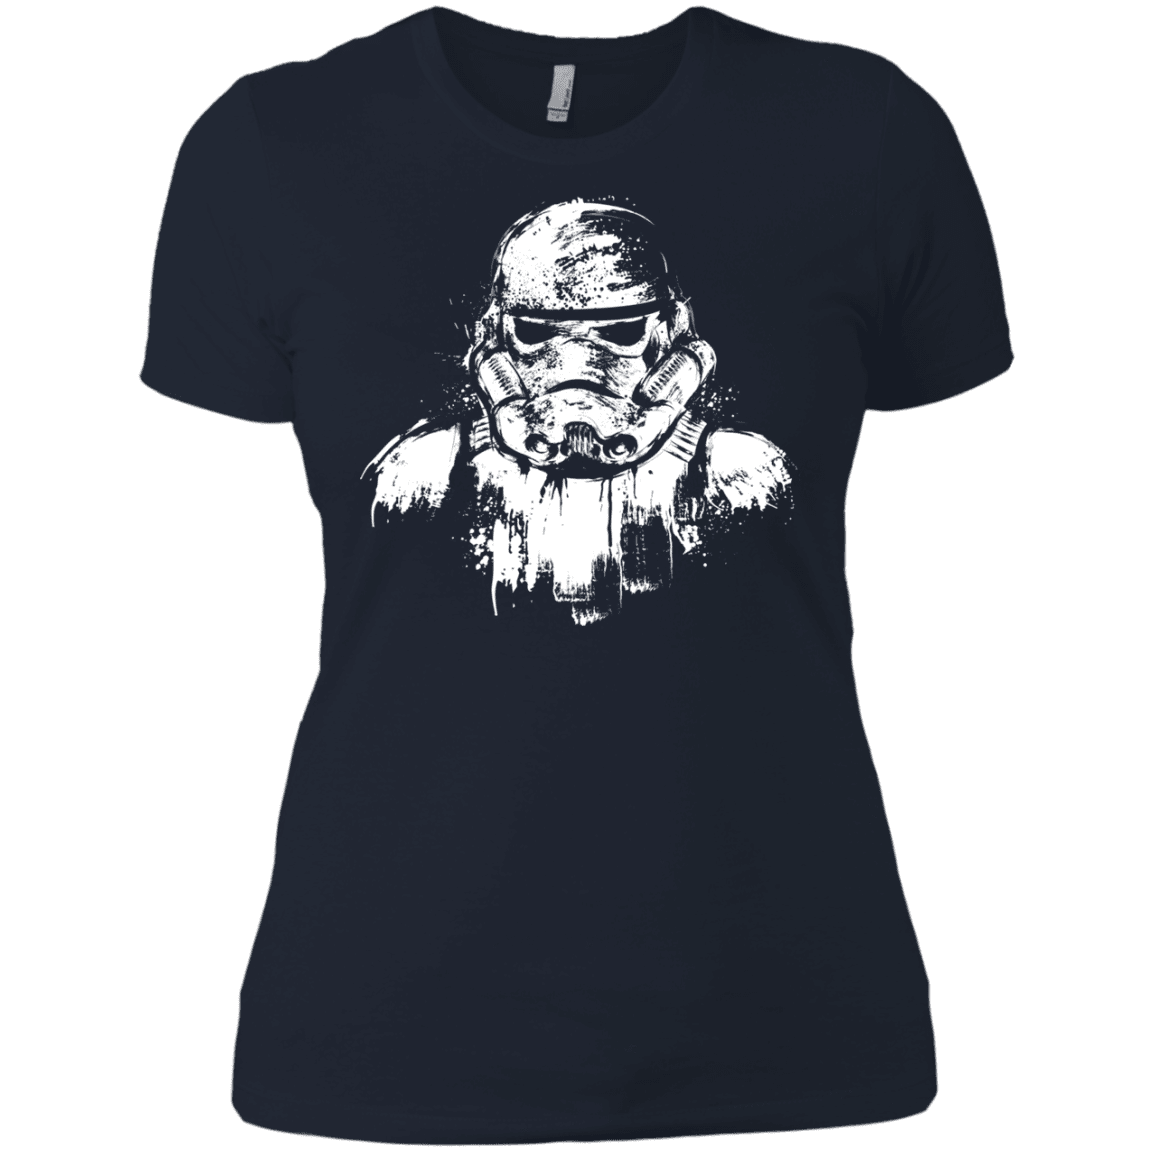 T-Shirts Midnight Navy / X-Small STORMTROOPER ARMOR Women's Premium T-Shirt